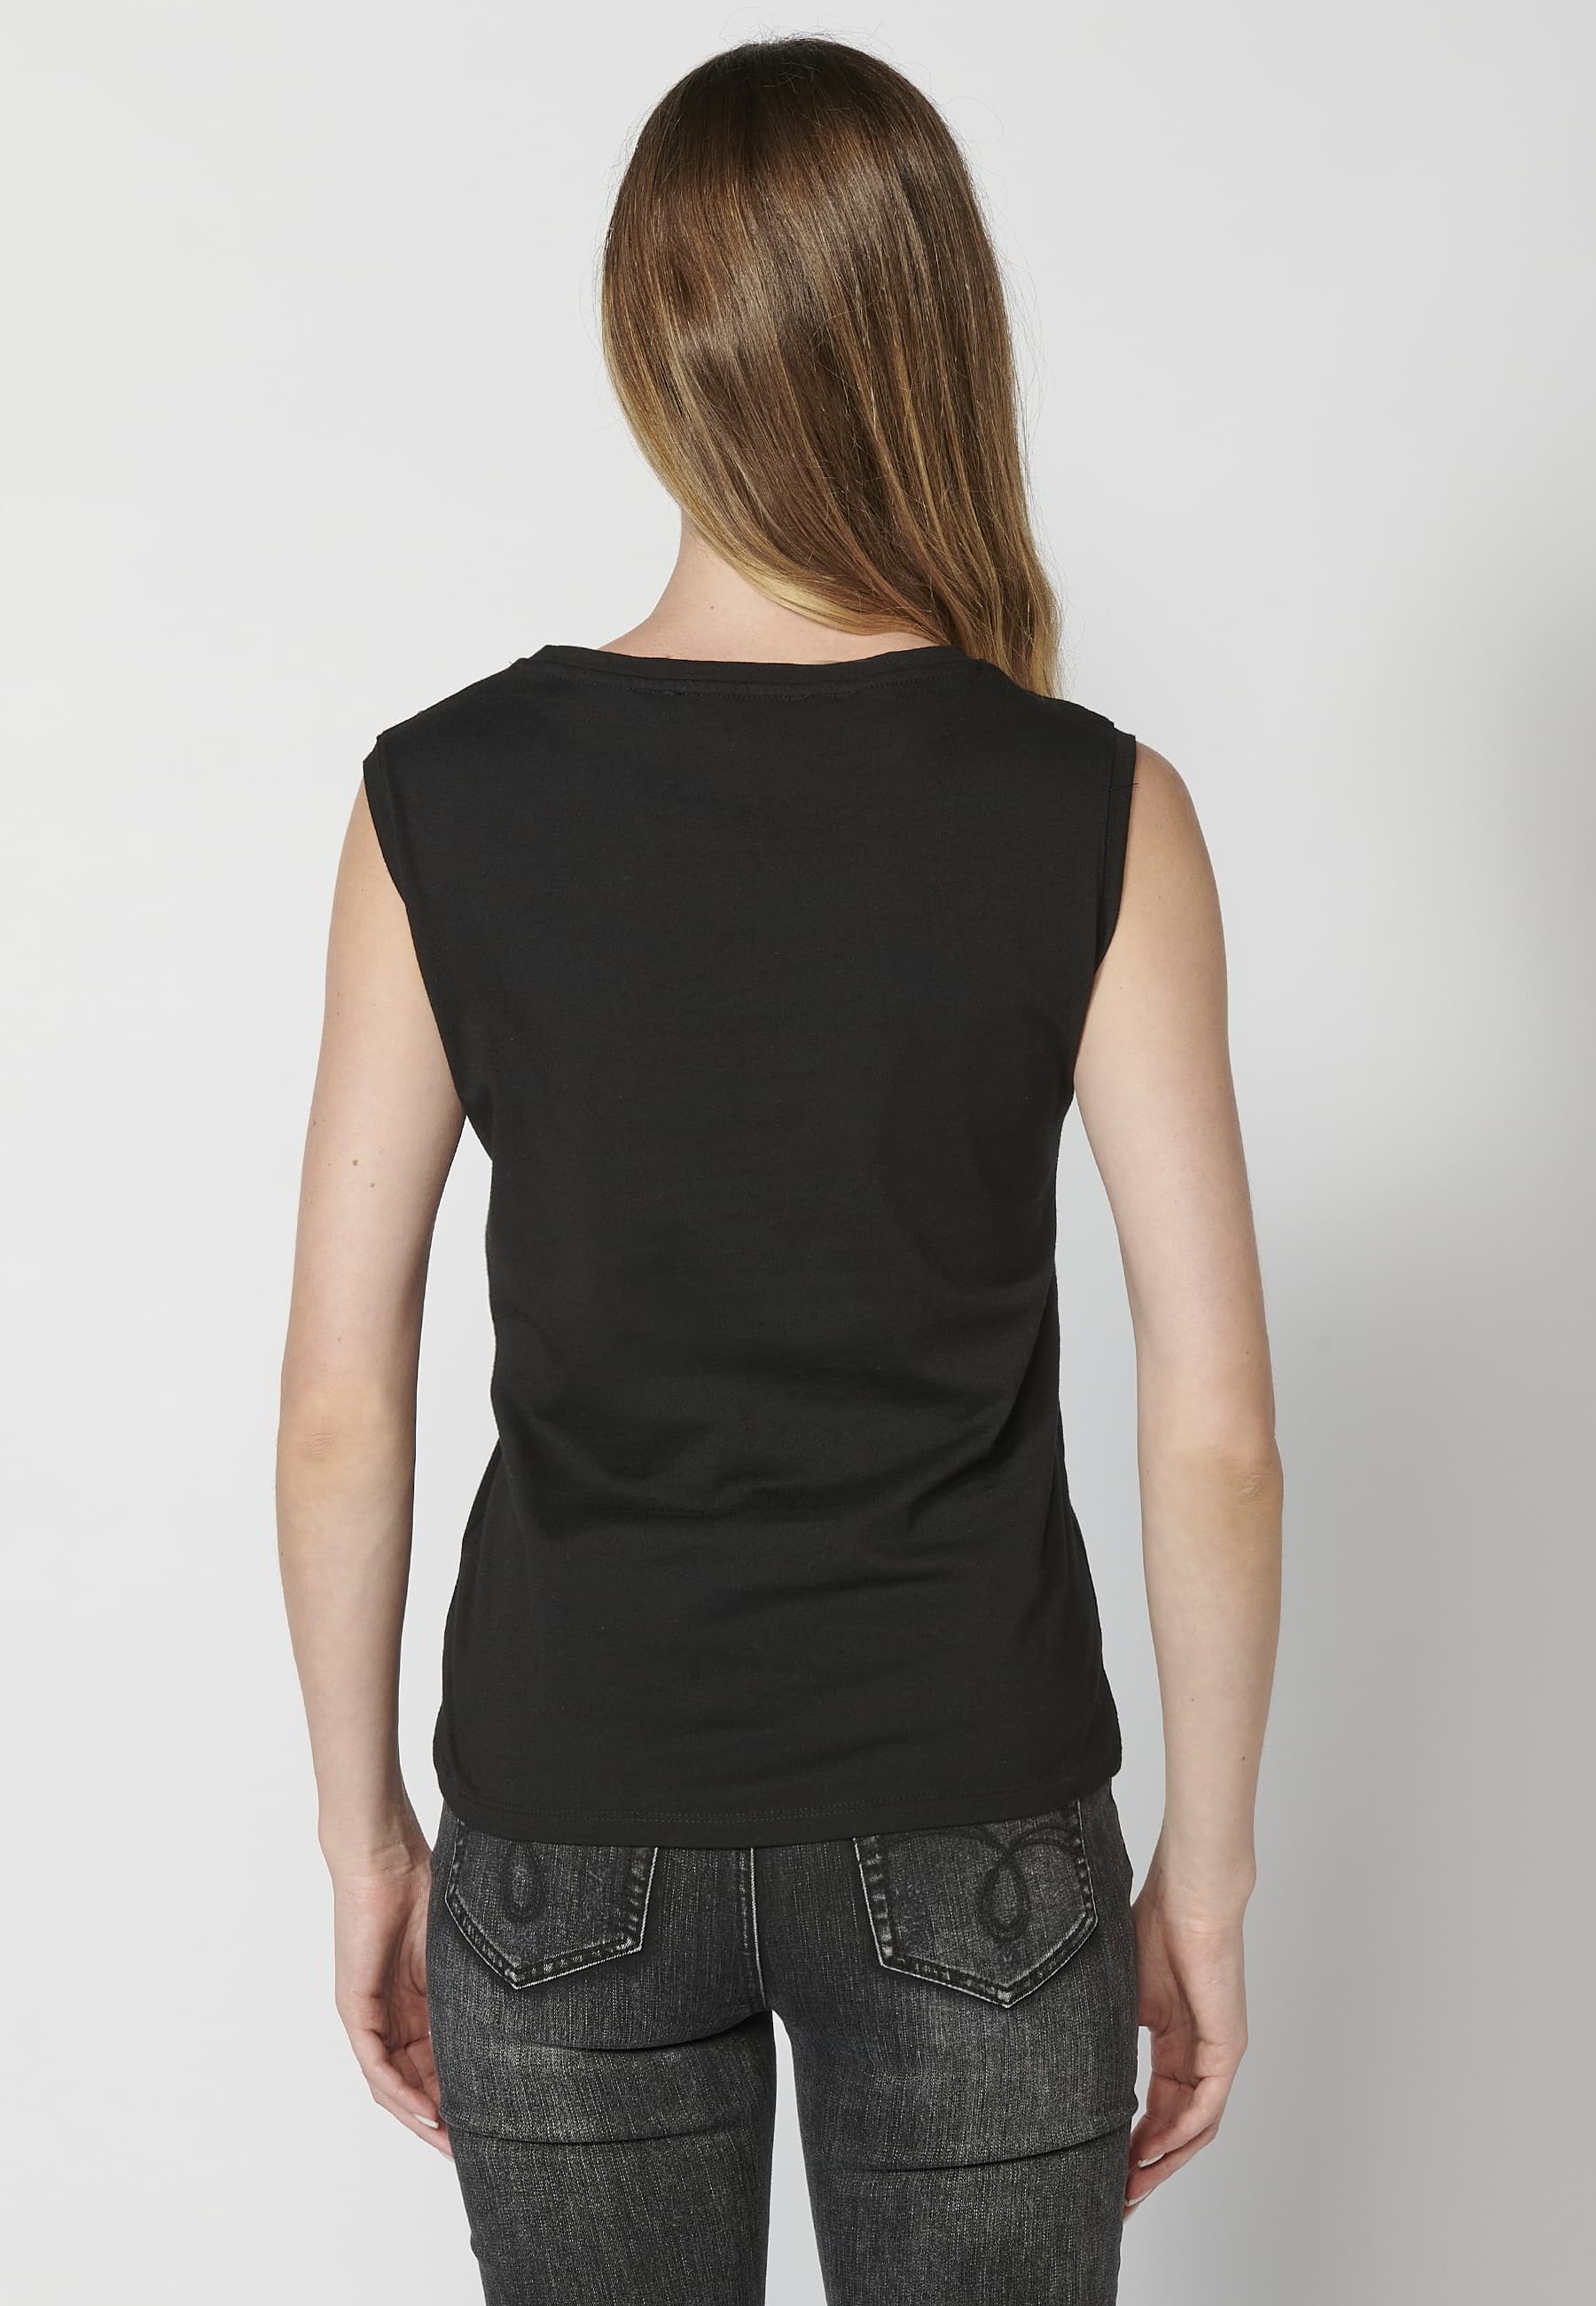 Black floral print round neck cotton sleeveless top T-shirt for women 4